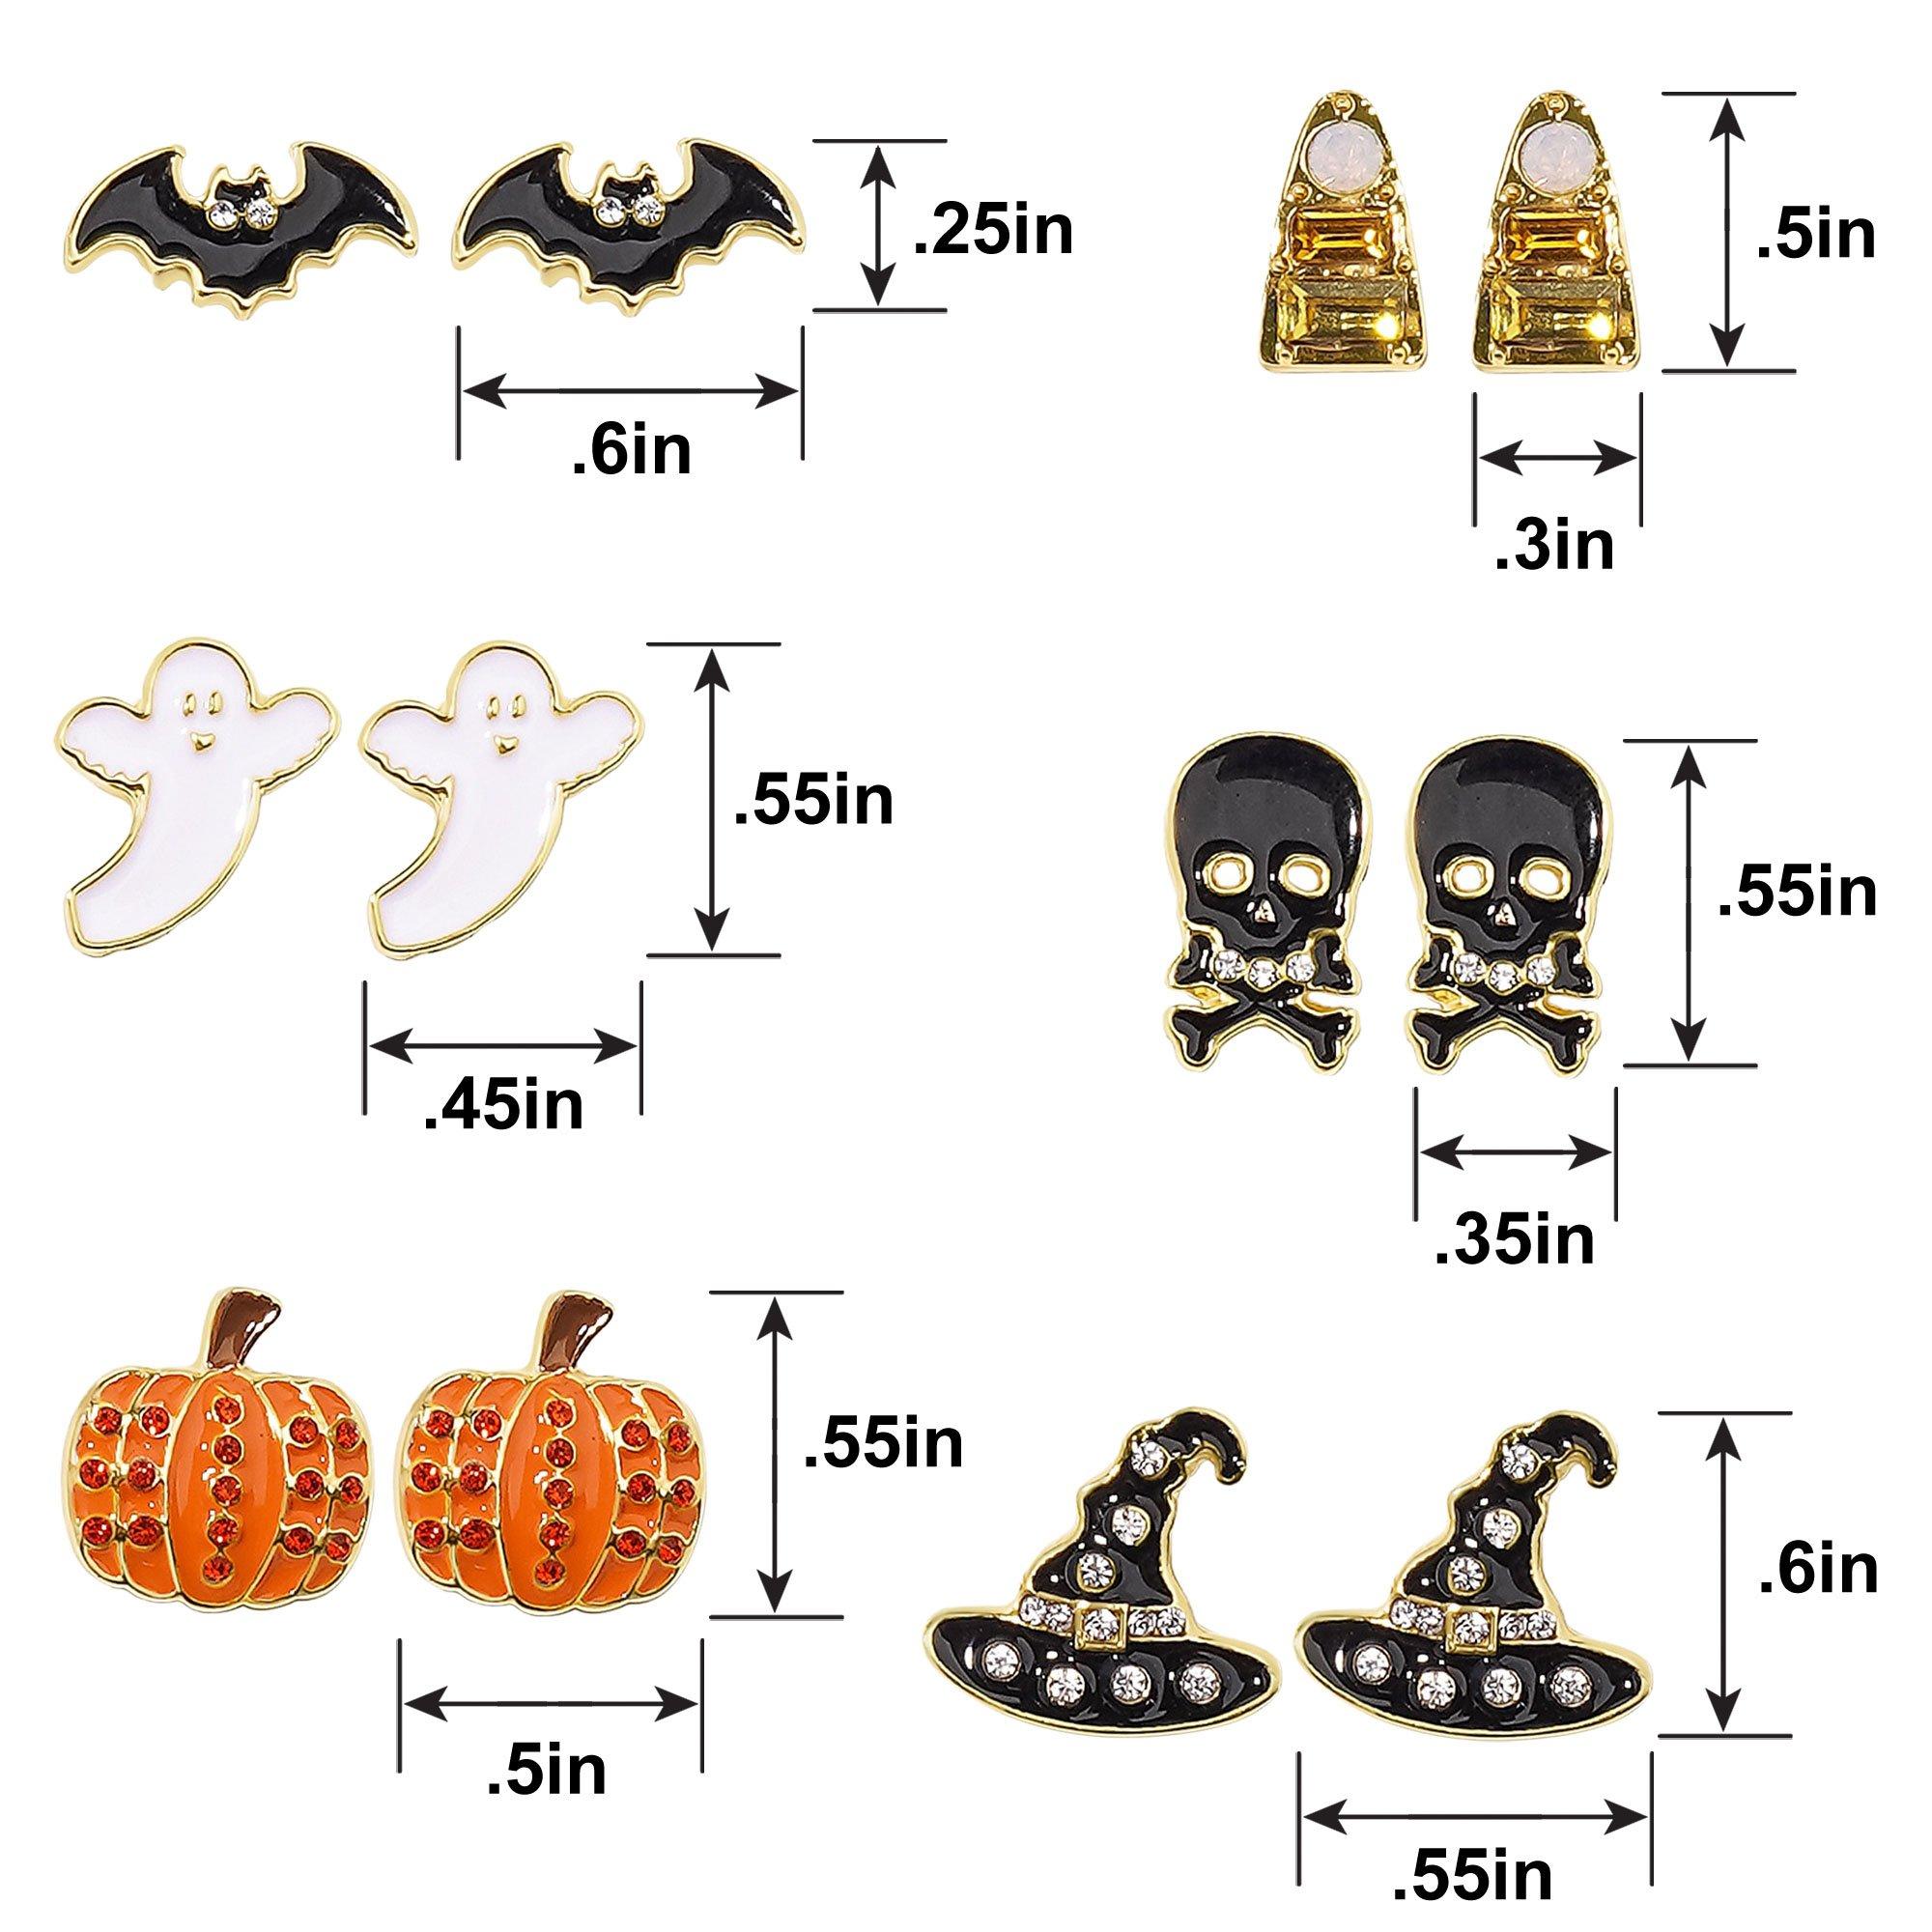 Halloween Icons Mini Stud Earring Set, 6pc